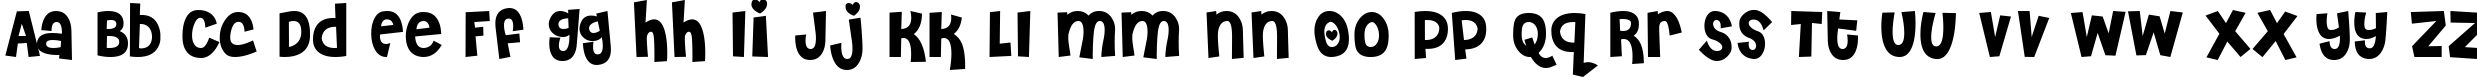 Пример написания английского алфавита шрифтом Cheri